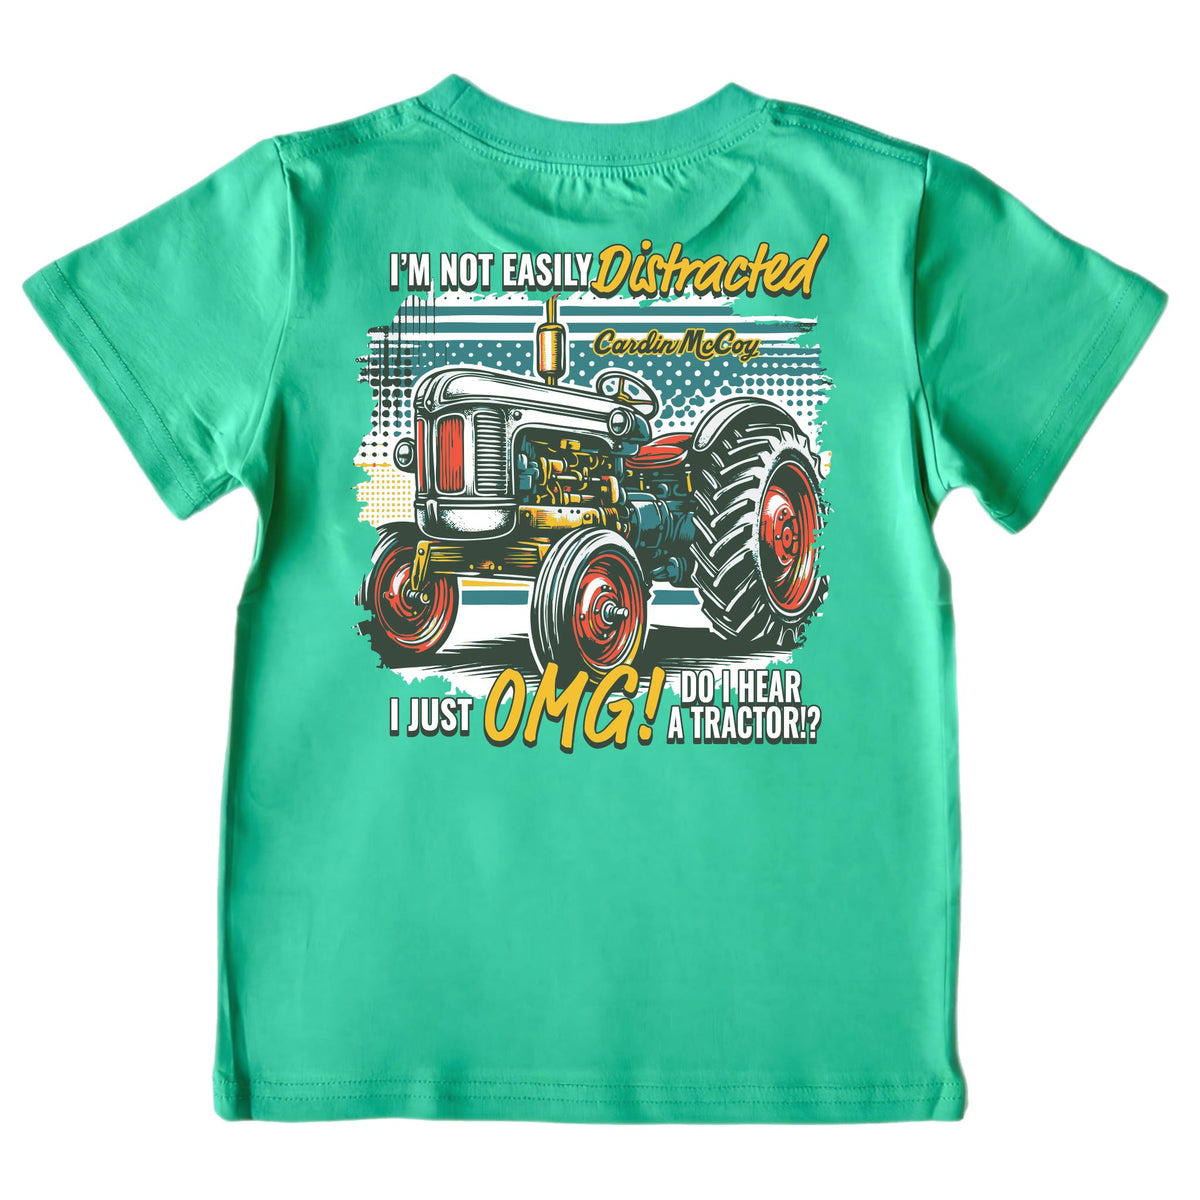 Boys' Distracted by Tractors Short-Sleeve Tee Short Sleeve T-Shirt Cardin McCoy Green XXS (2/3) Pocket